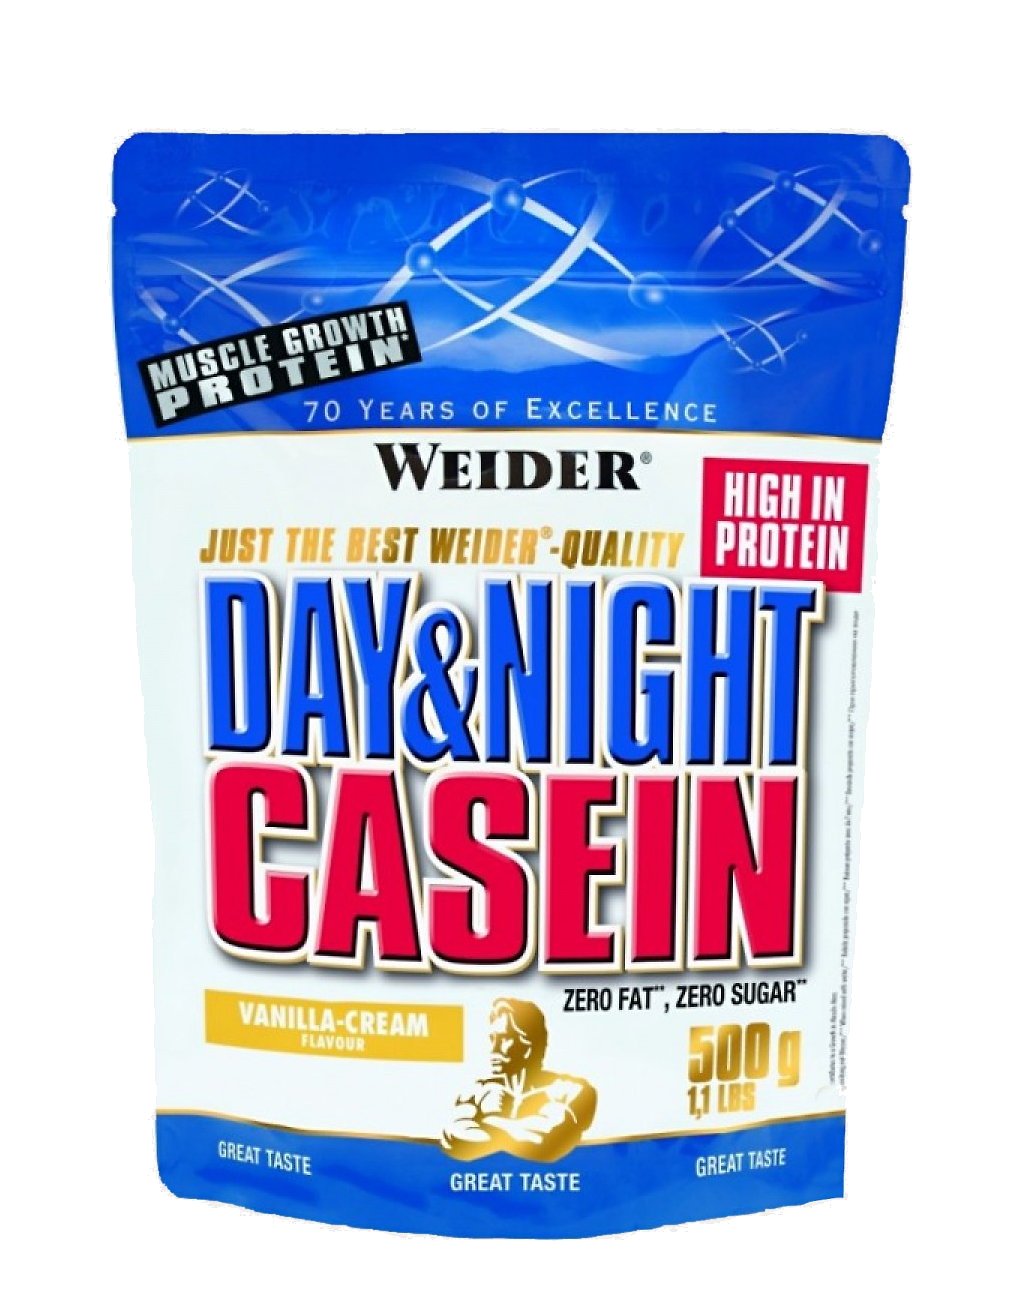 Day & Night Casein, 500 г, Weider. Казеин. Снижение веса 